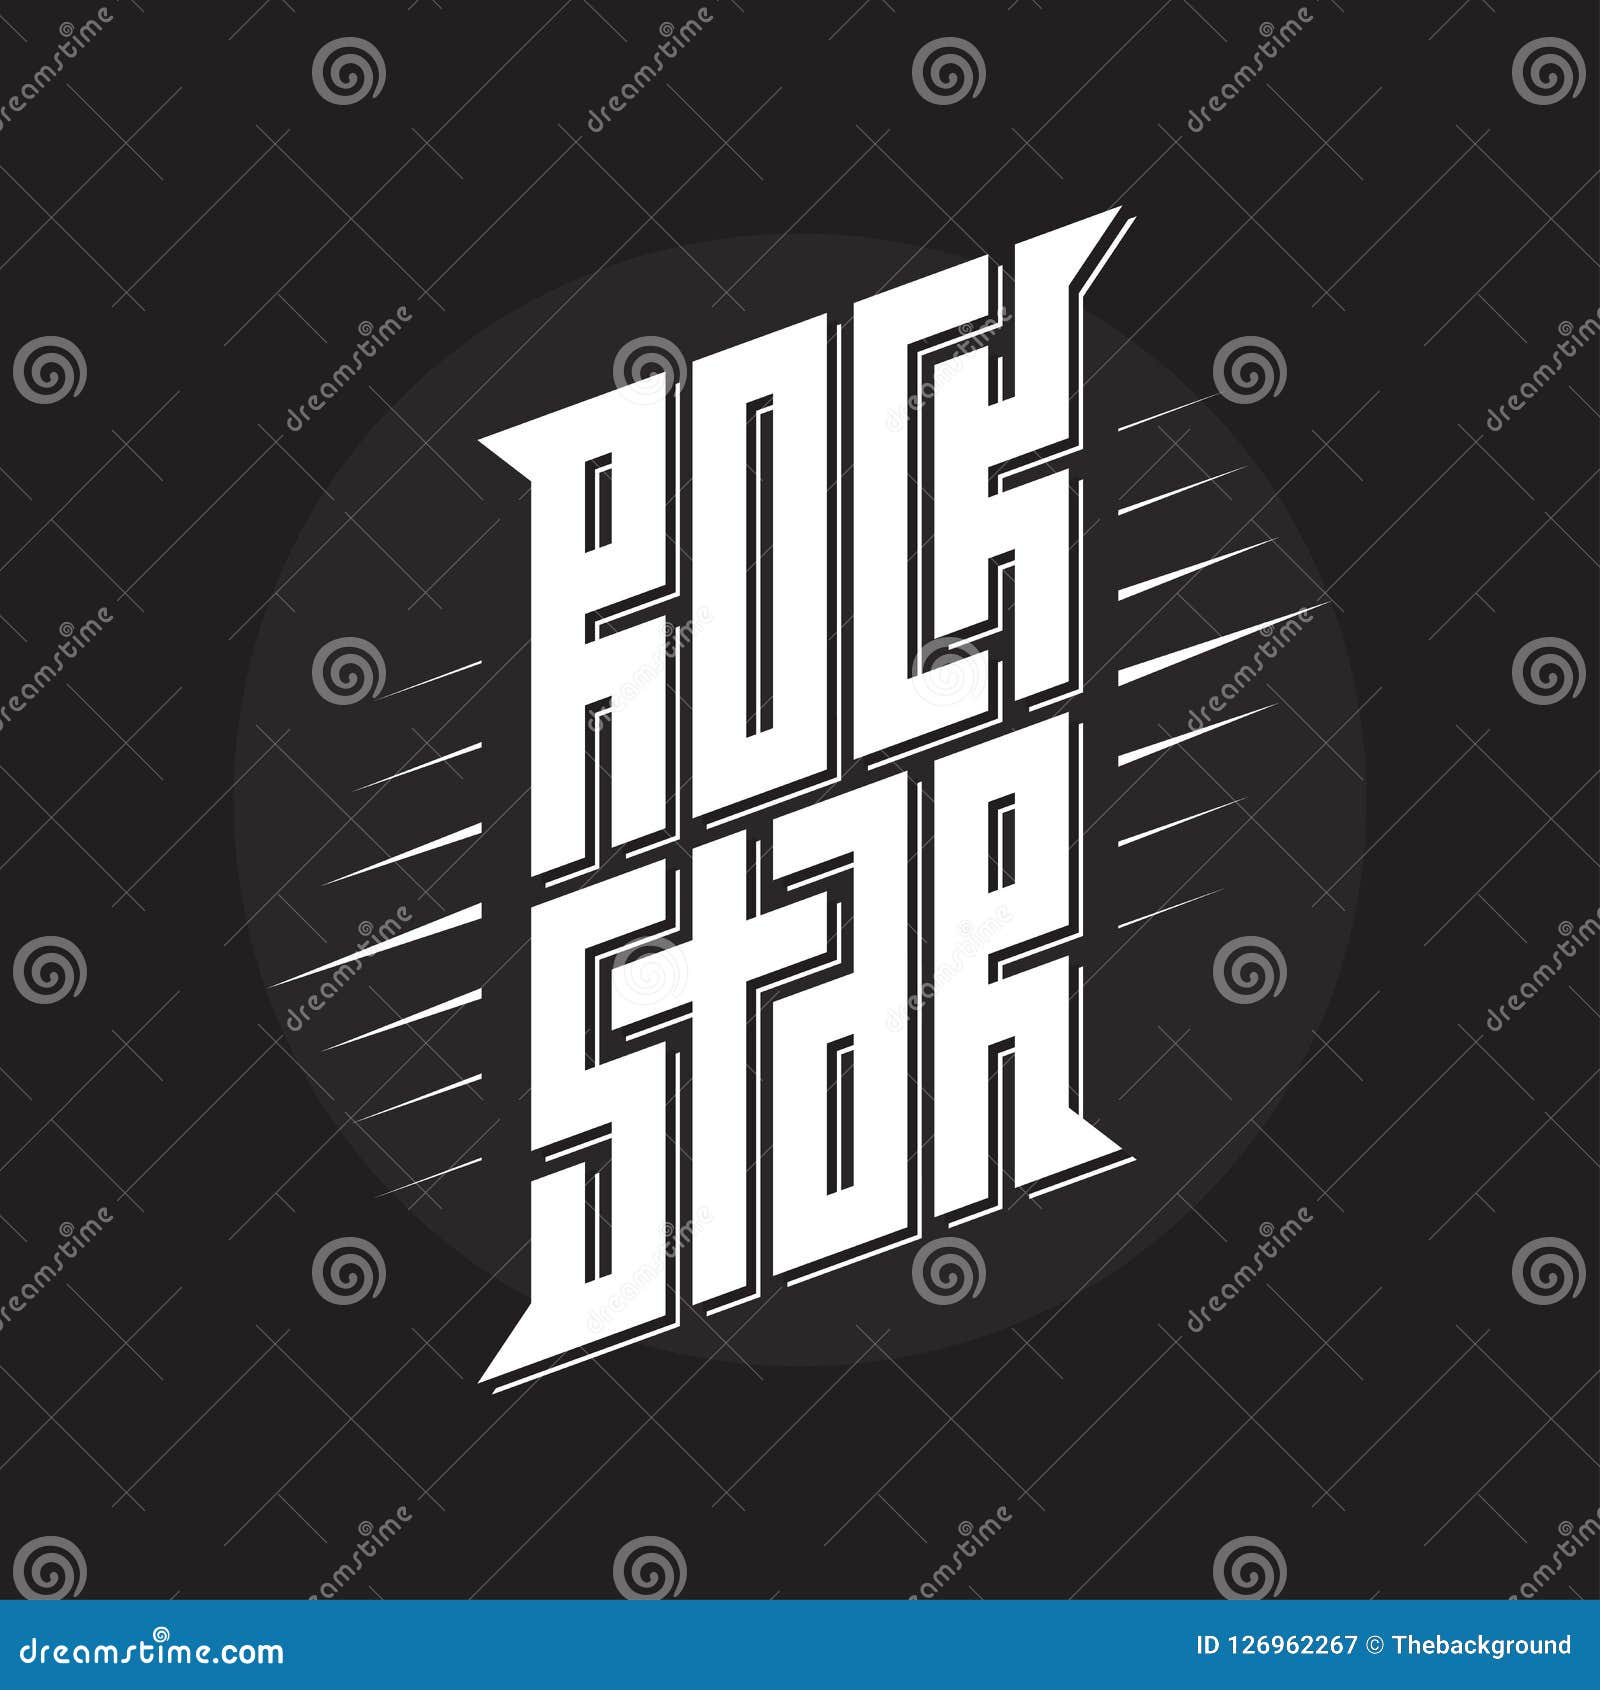 Rockstar - Music Poster or Band Label. Rock Star - T-shirt Design. T ...